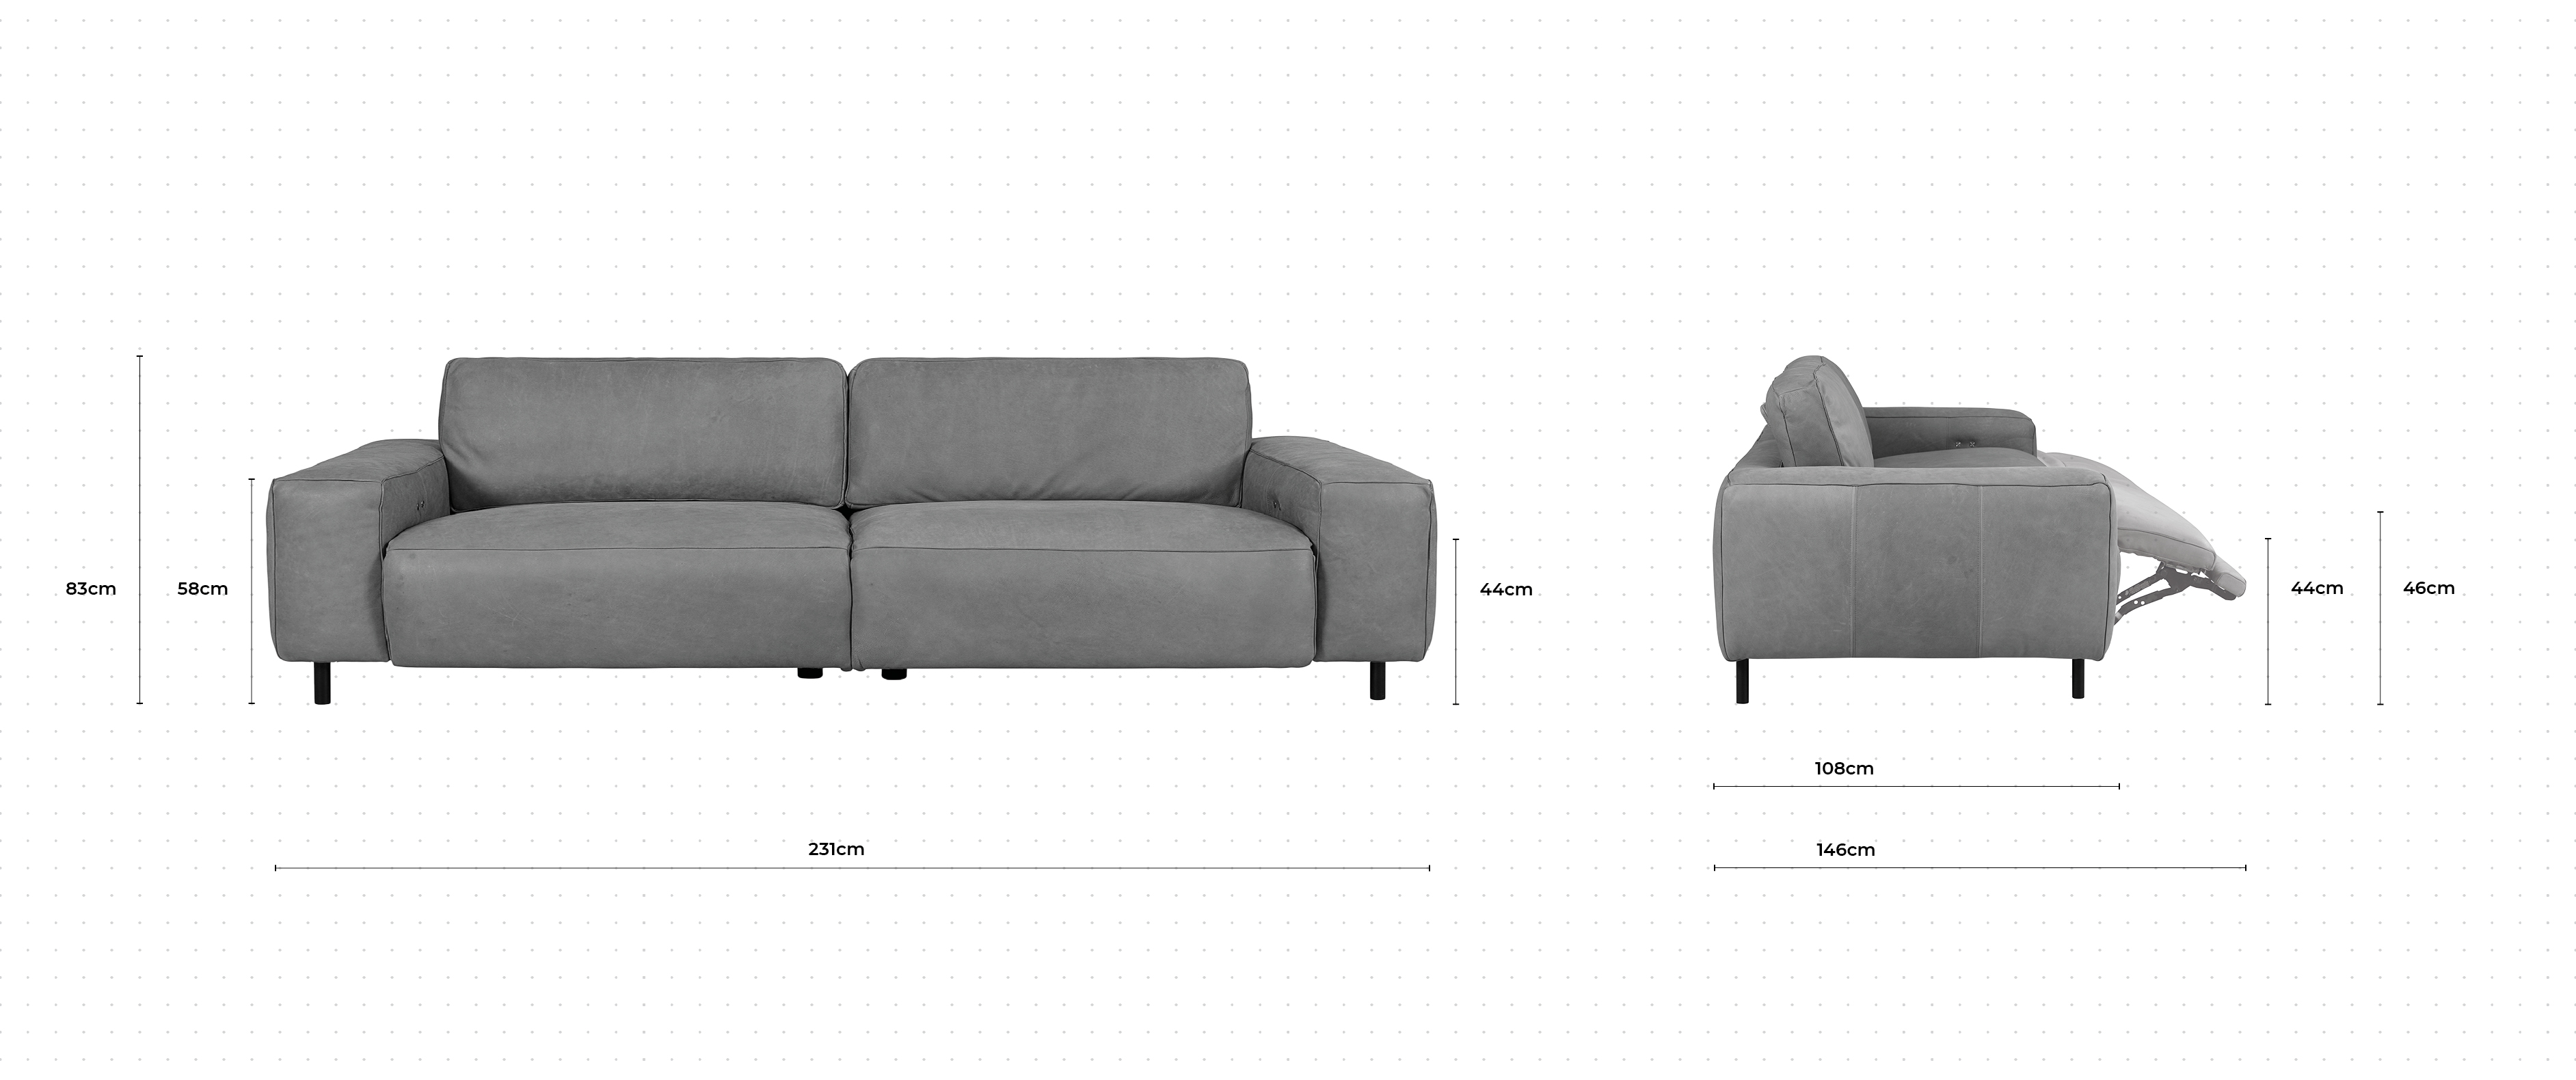 Kubrick 3 Seater Sofa dimensions